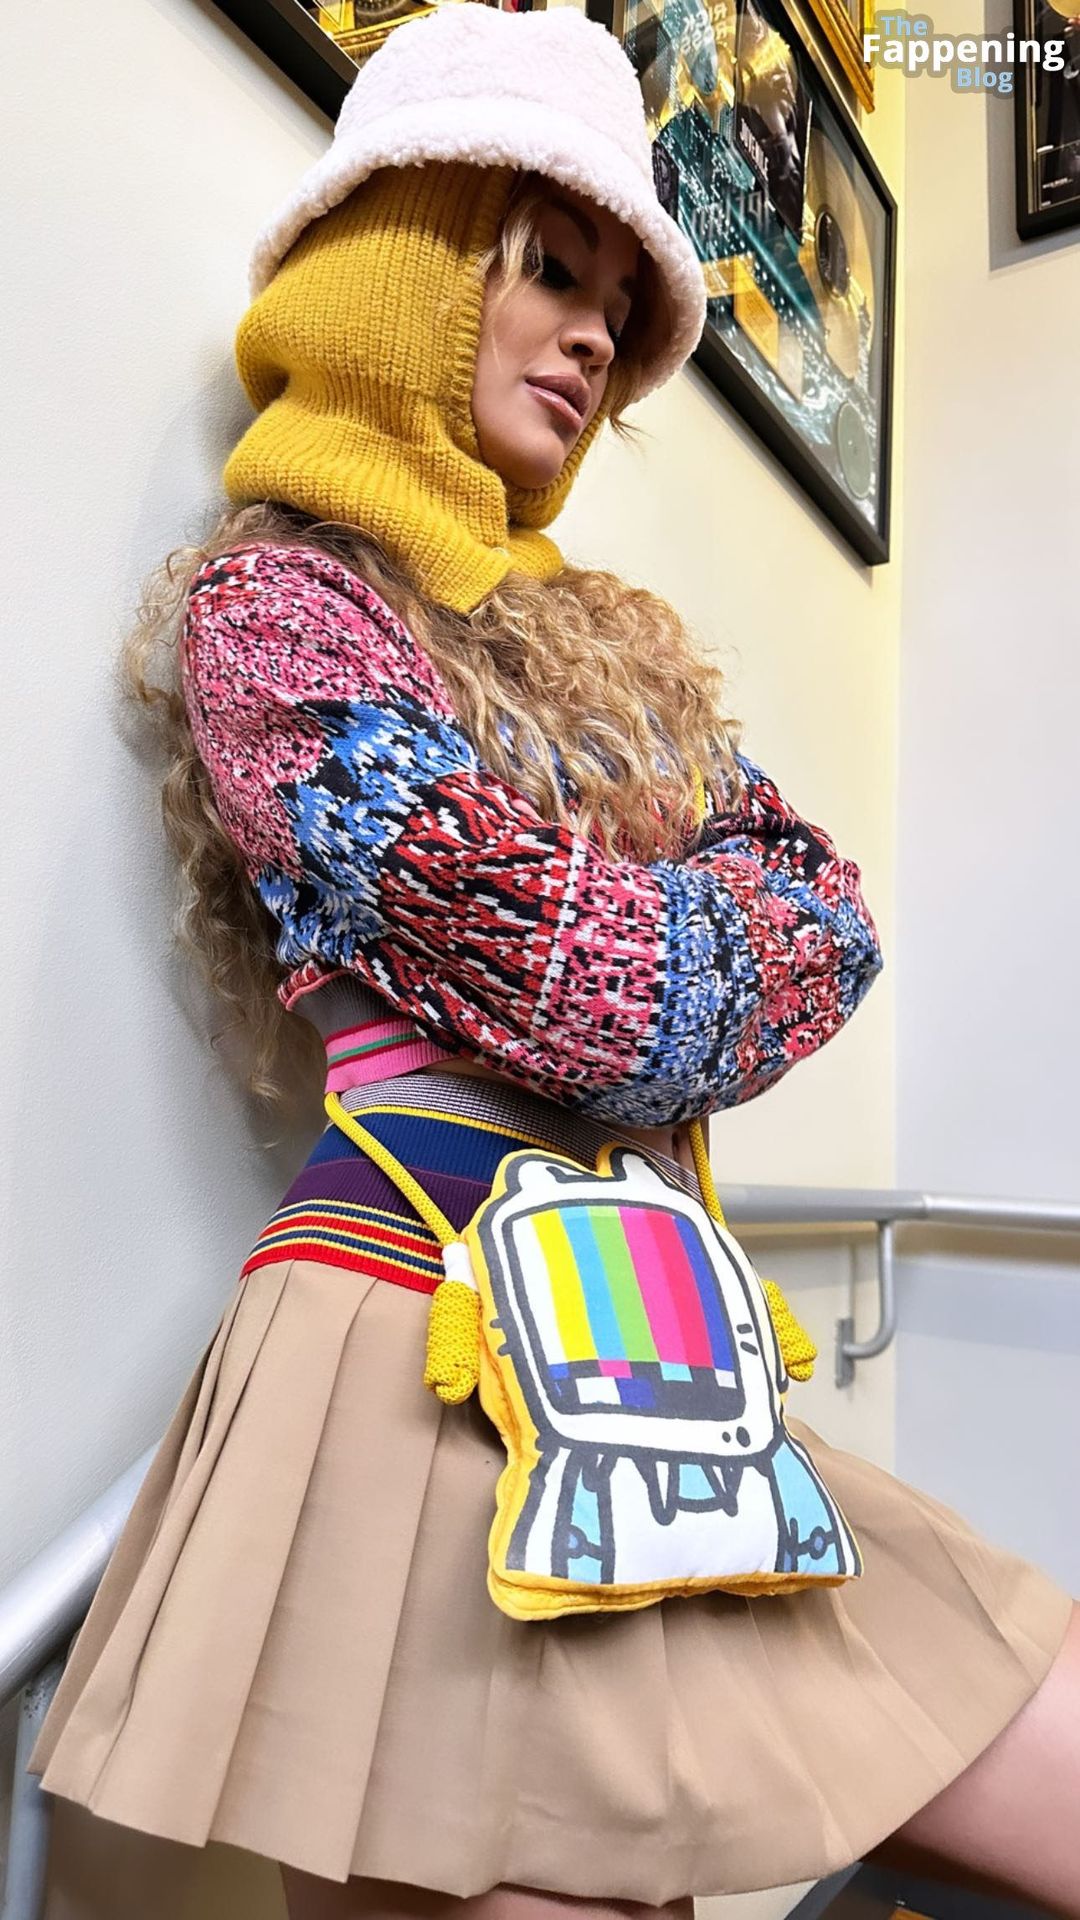 Rita Ora Shows Off Her Slender Figure in a New Instagram Shoot (14 Photos)